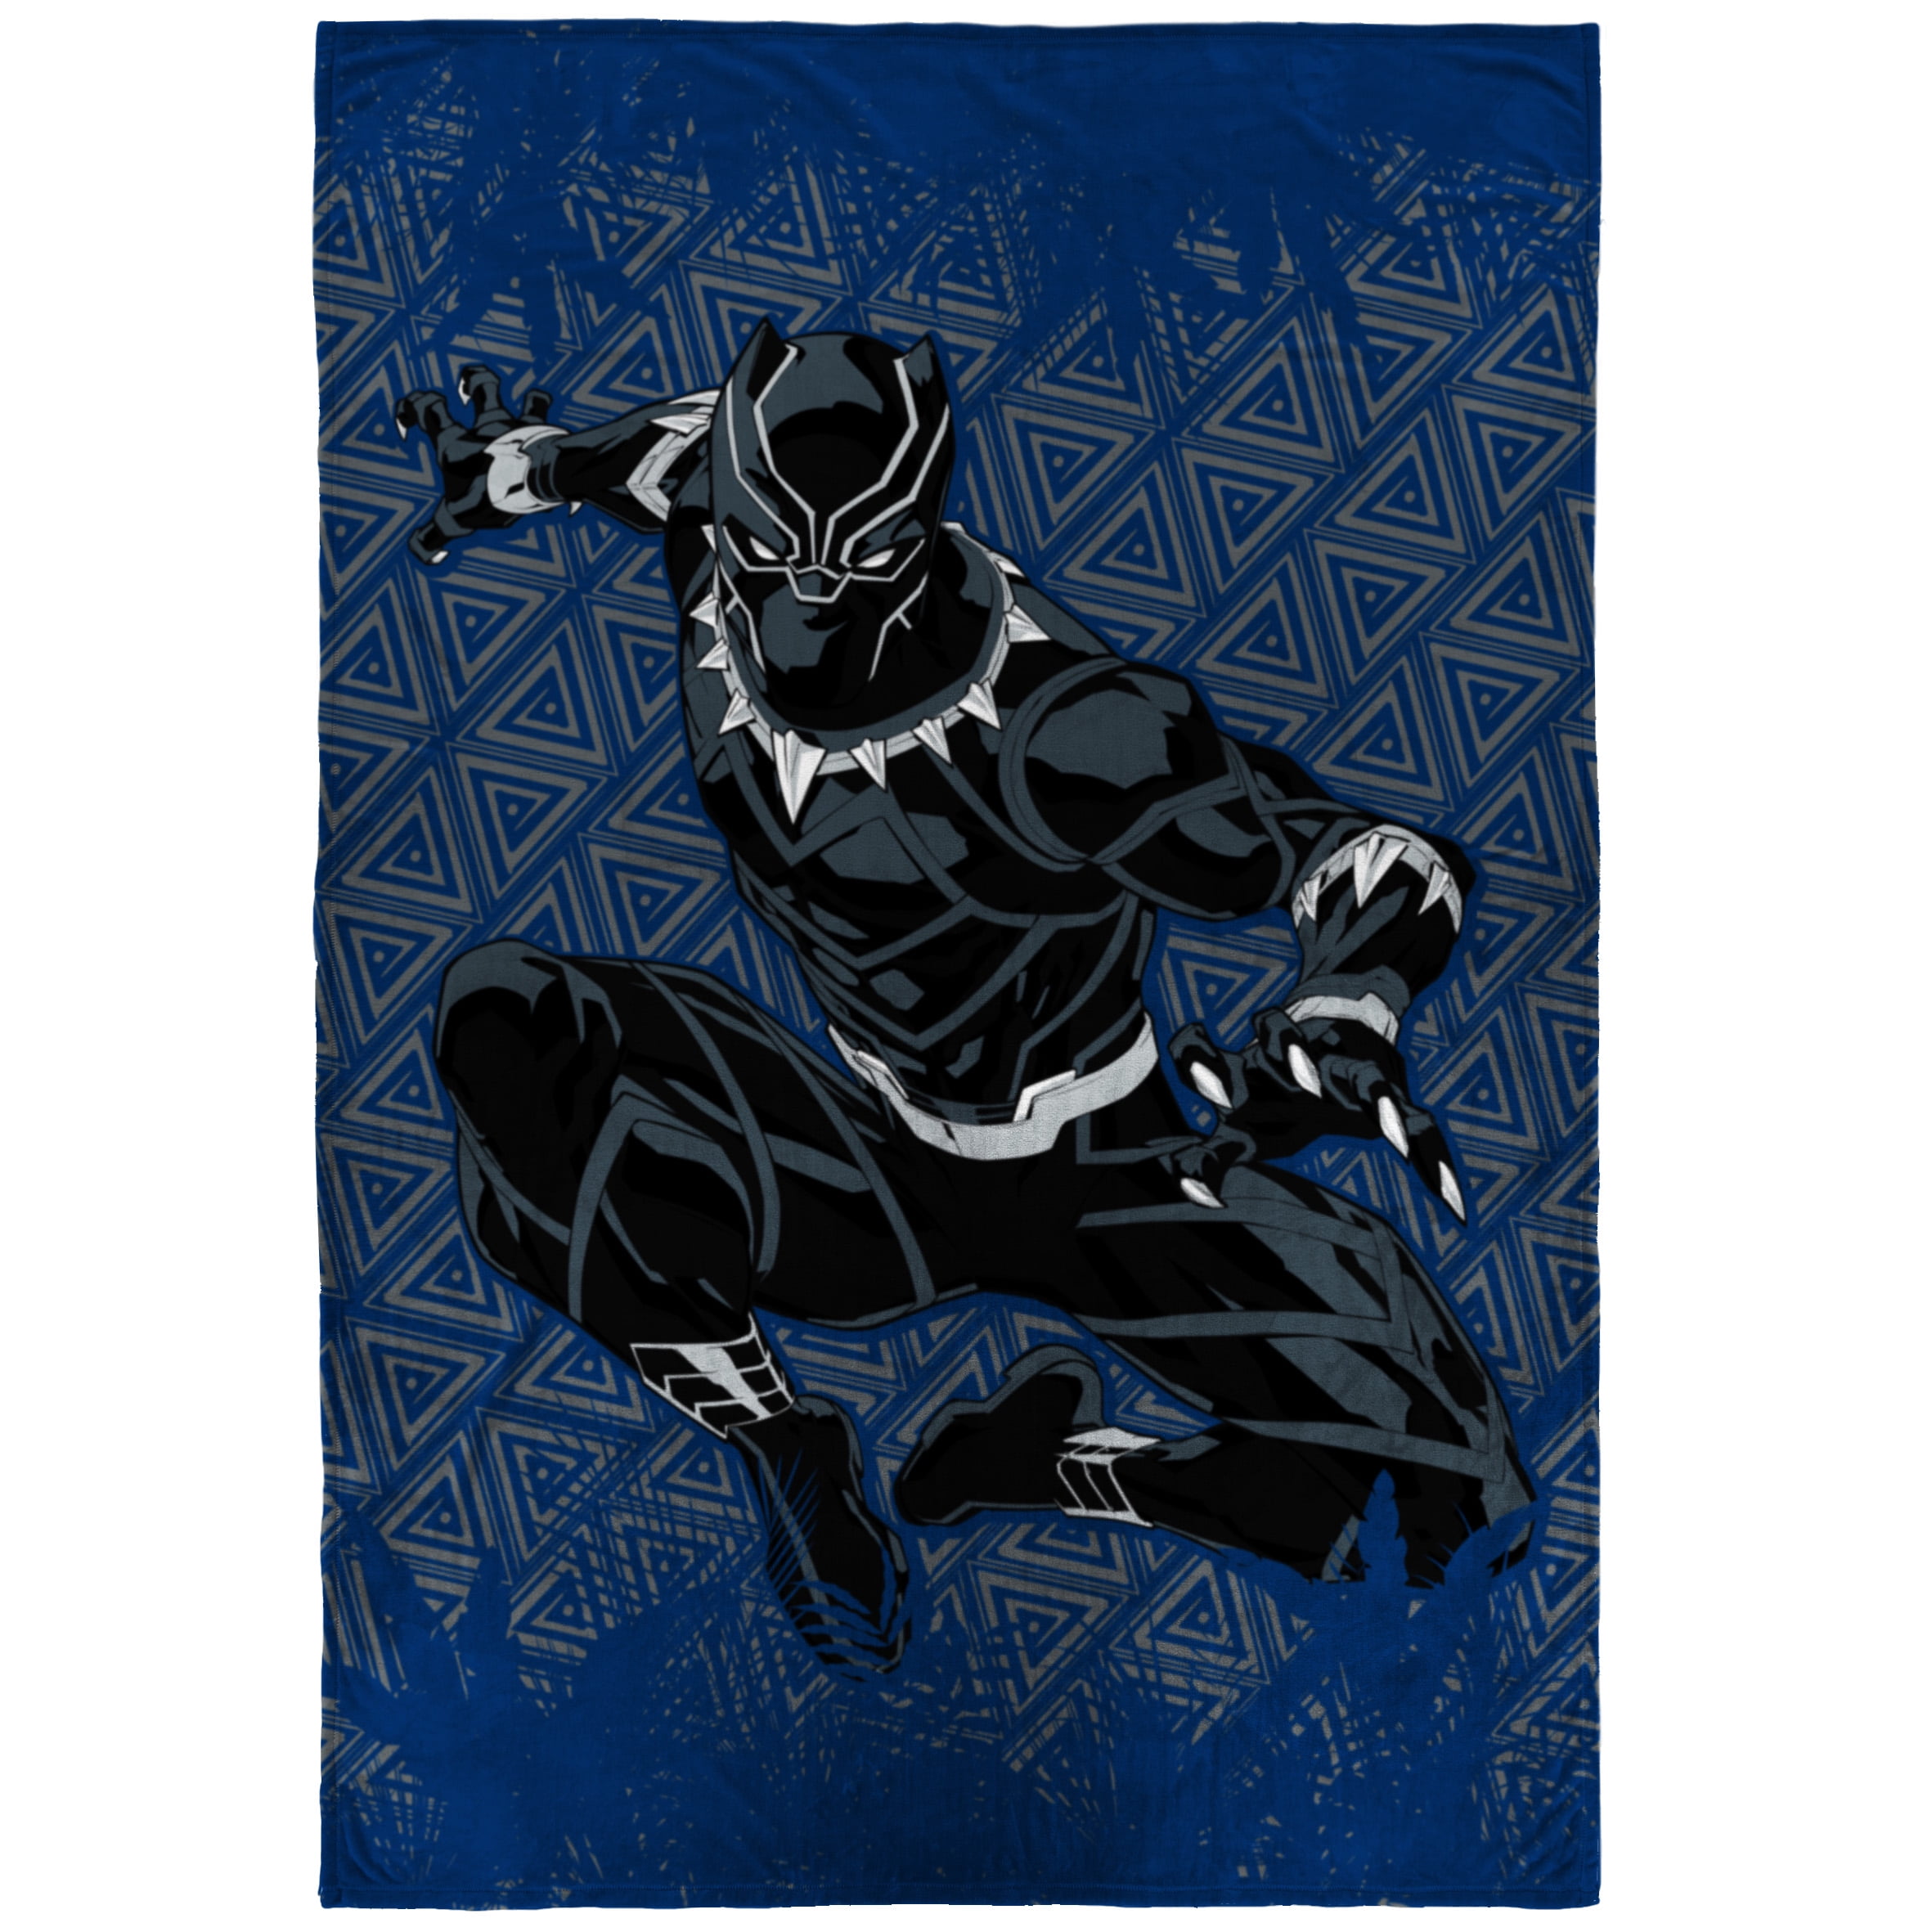 Black Panther King of Wakanda Kids Blanket, 62 x 90, Microfiber, Black, Marvel